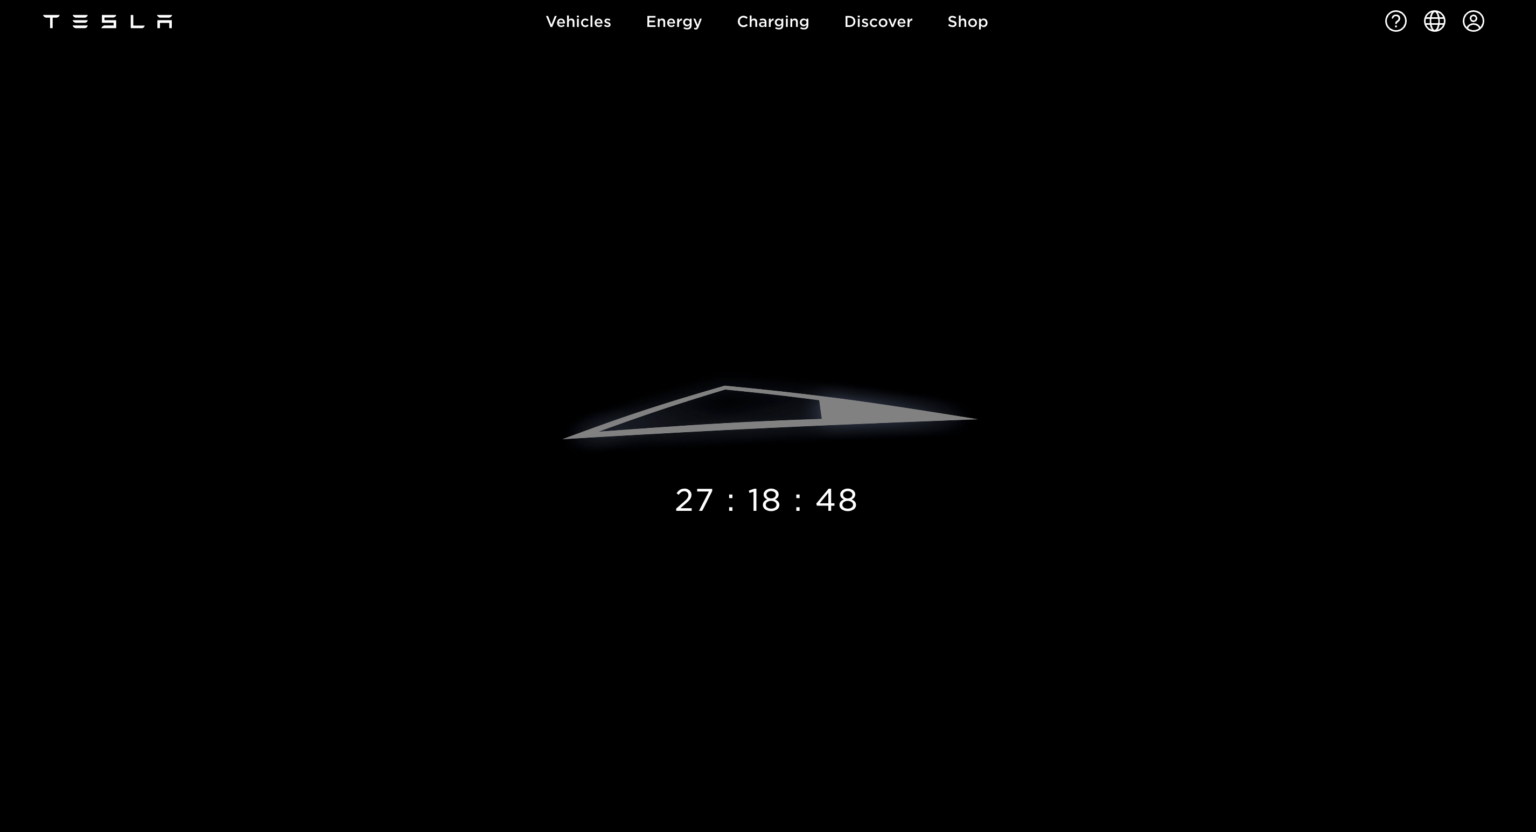 Tesla Cybertuck Reservations exterior image 6